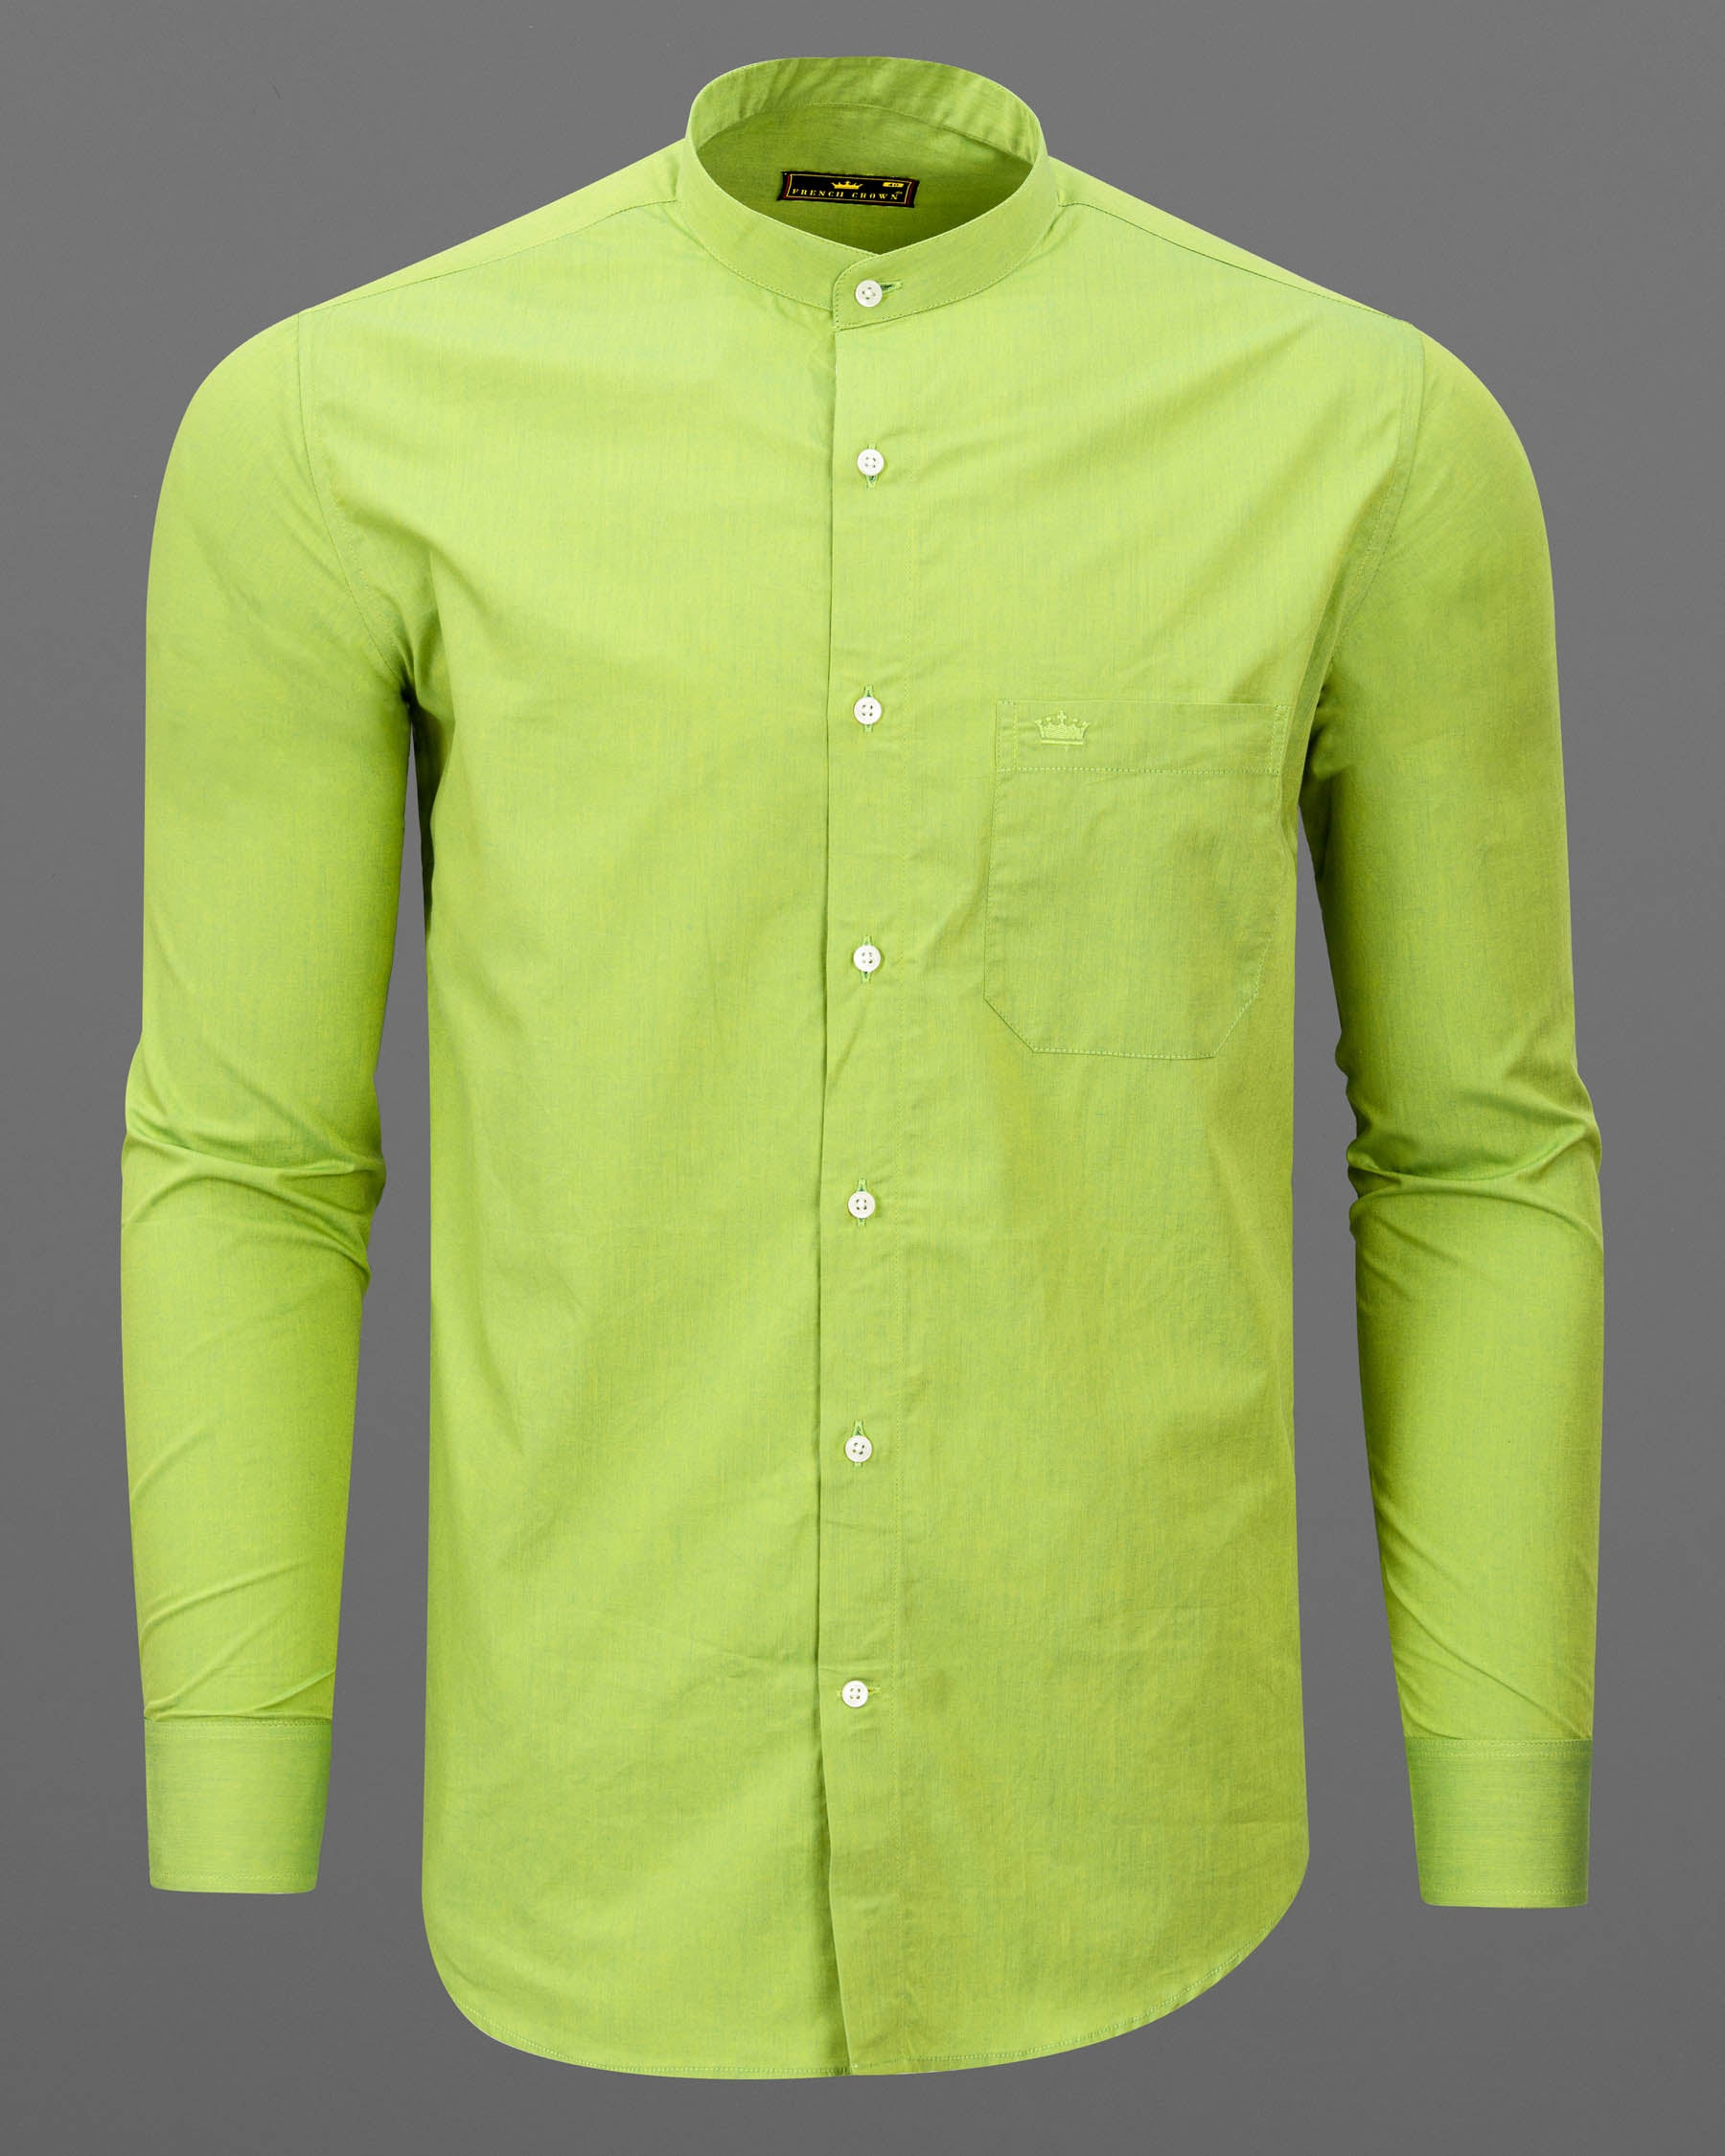 Conifer Green Chambray Premium Cotton Shirt 6105-M-38, 6105-M-H-38, 6105-M-39, 6105-M-H-39, 6105-M-40, 6105-M-H-40, 6105-M-42, 6105-M-H-42, 6105-M-44, 6105-M-H-44, 6105-M-46, 6105-M-H-46, 6105-M-48, 6105-M-H-48, 6105-M-50, 6105-M-H-50, 6105-M-52, 6105-M-H-52